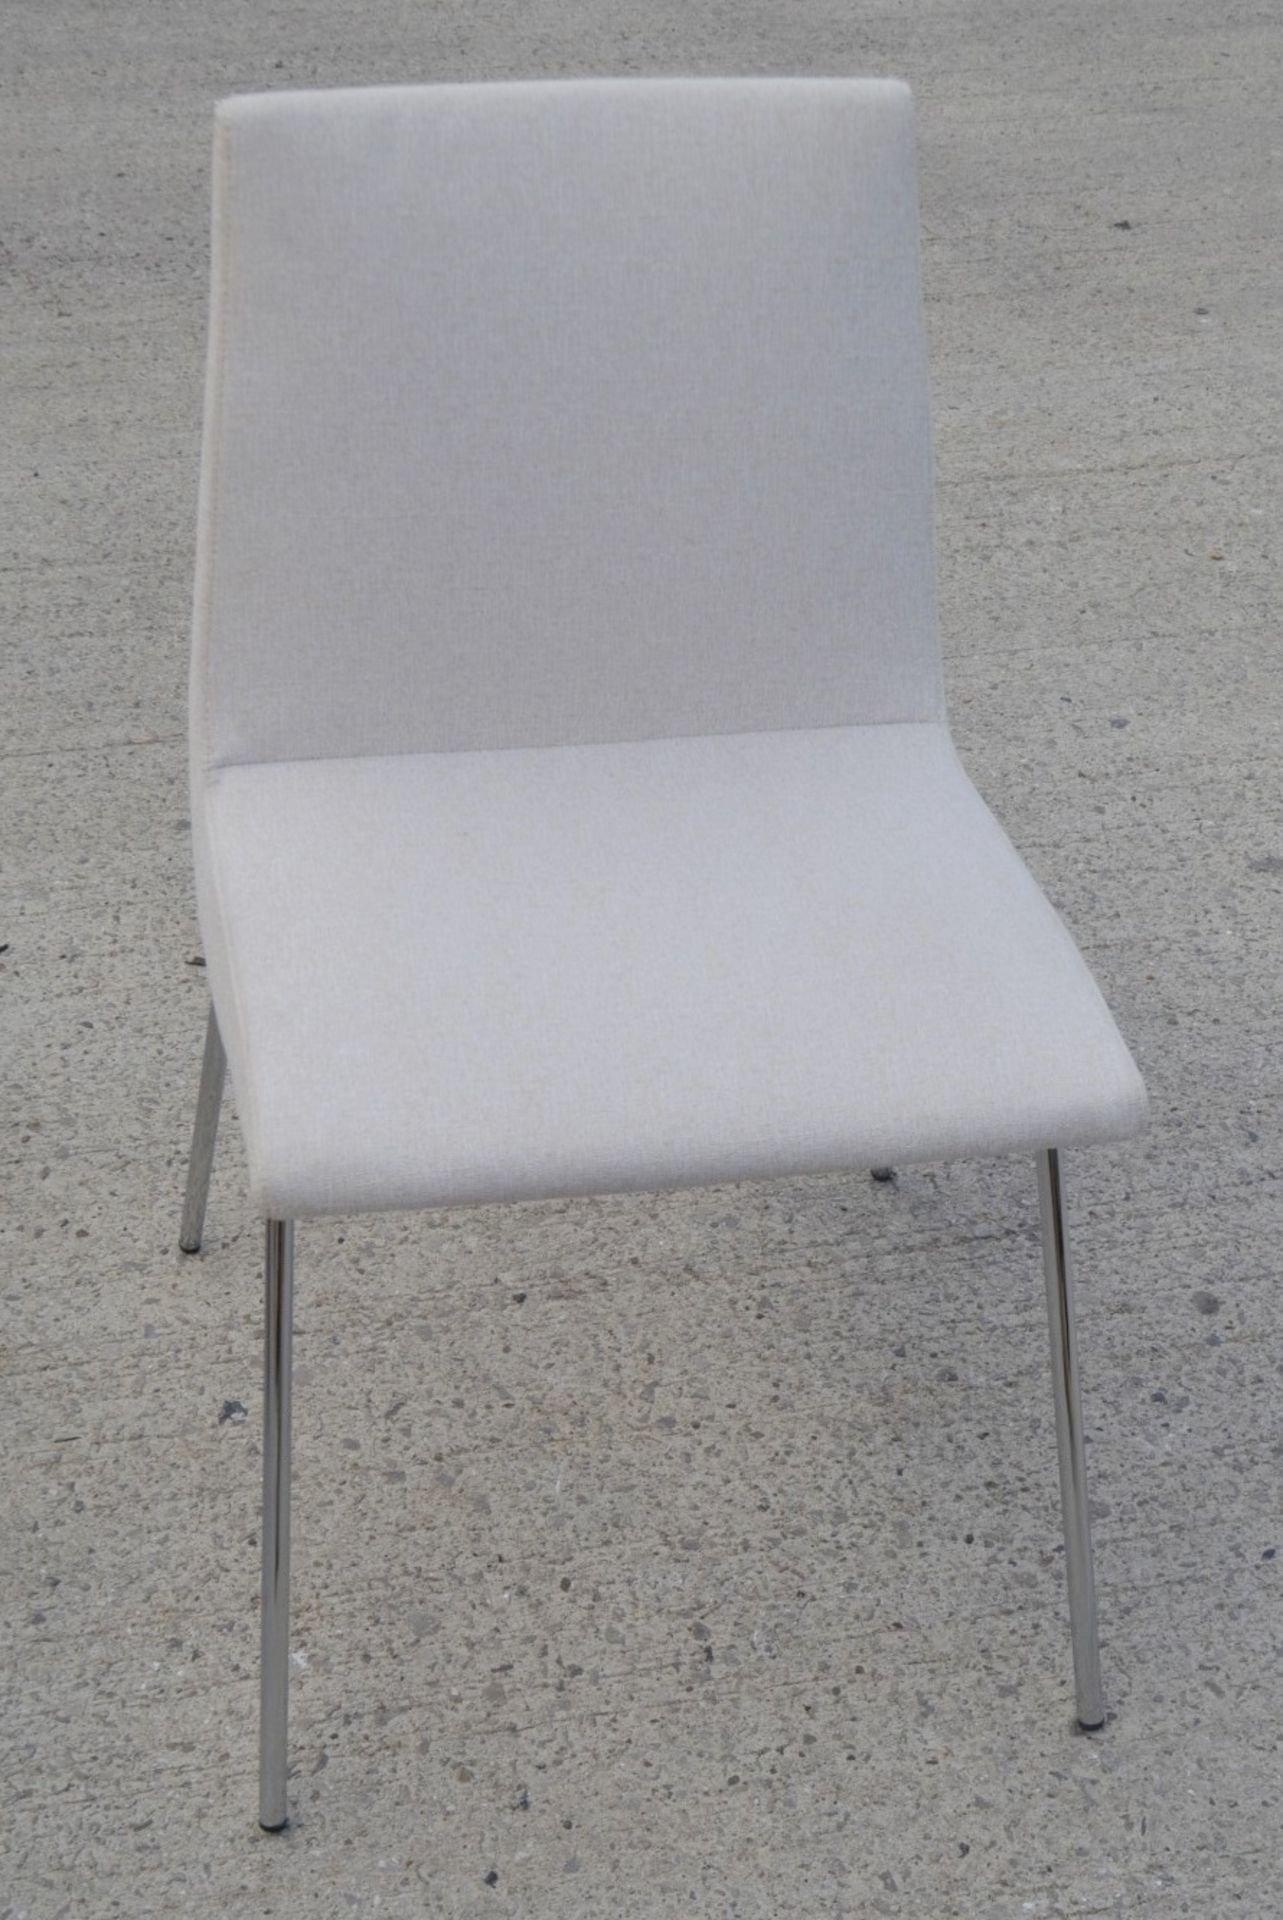 Pair Of LIGNE ROSET 'TV' Designer Dining Chairs In A Light Neutral Beige Fabric & Chromed Steel Legs - Image 8 of 9